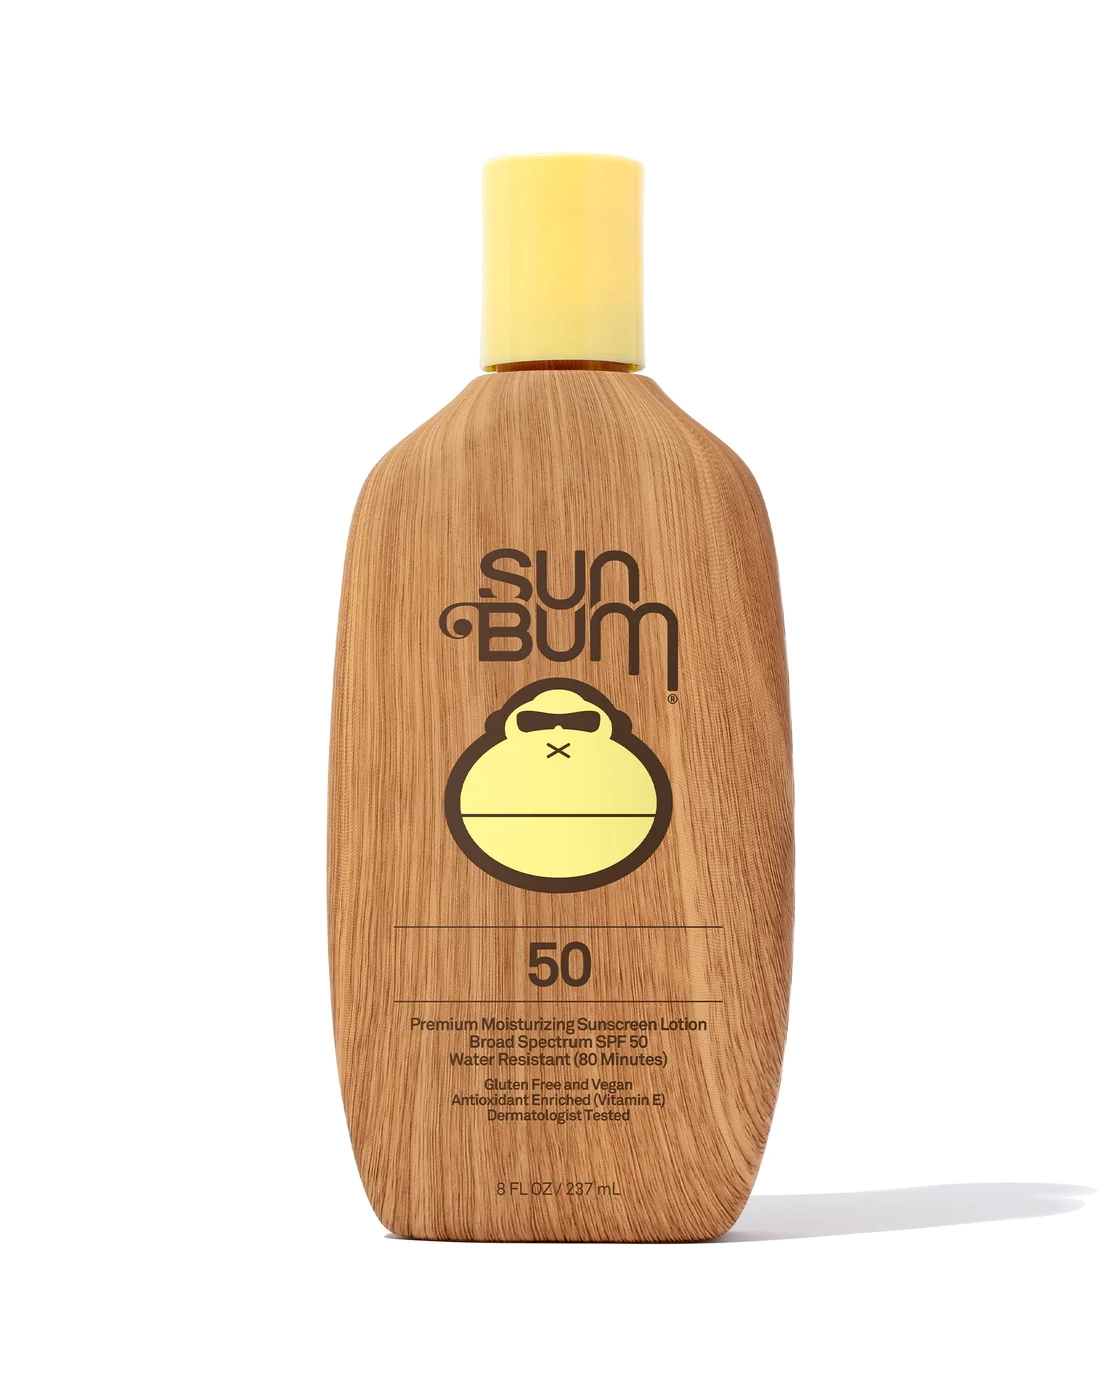 Sun Bum Original SPF 50 Suncreen Lotion